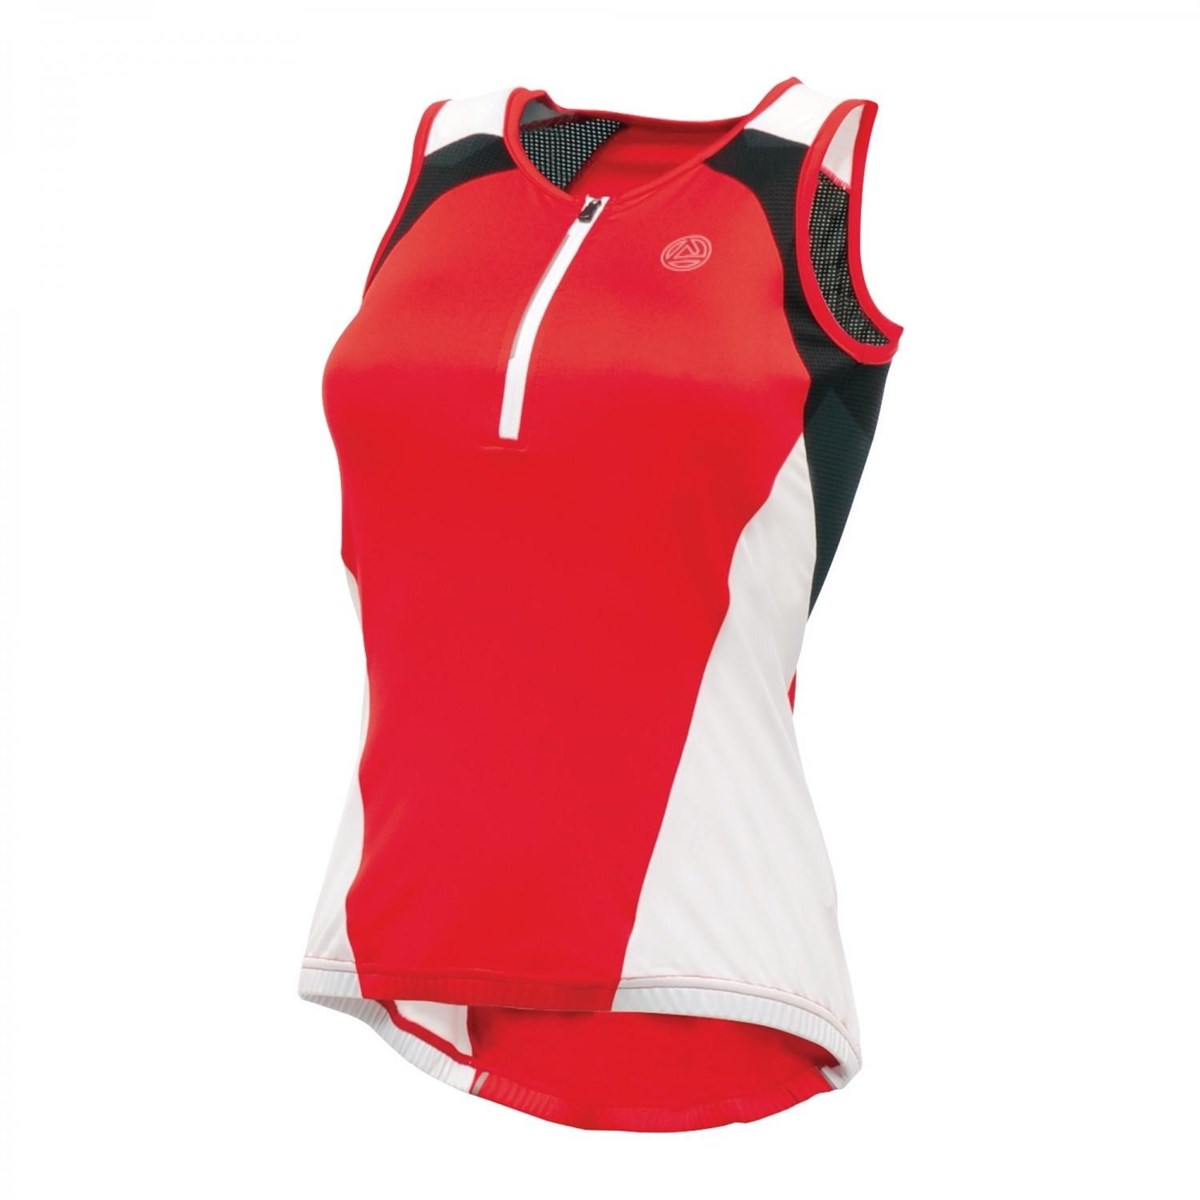 Dare2B Splendor Womens Short Sleeve Cycling Jersey product image